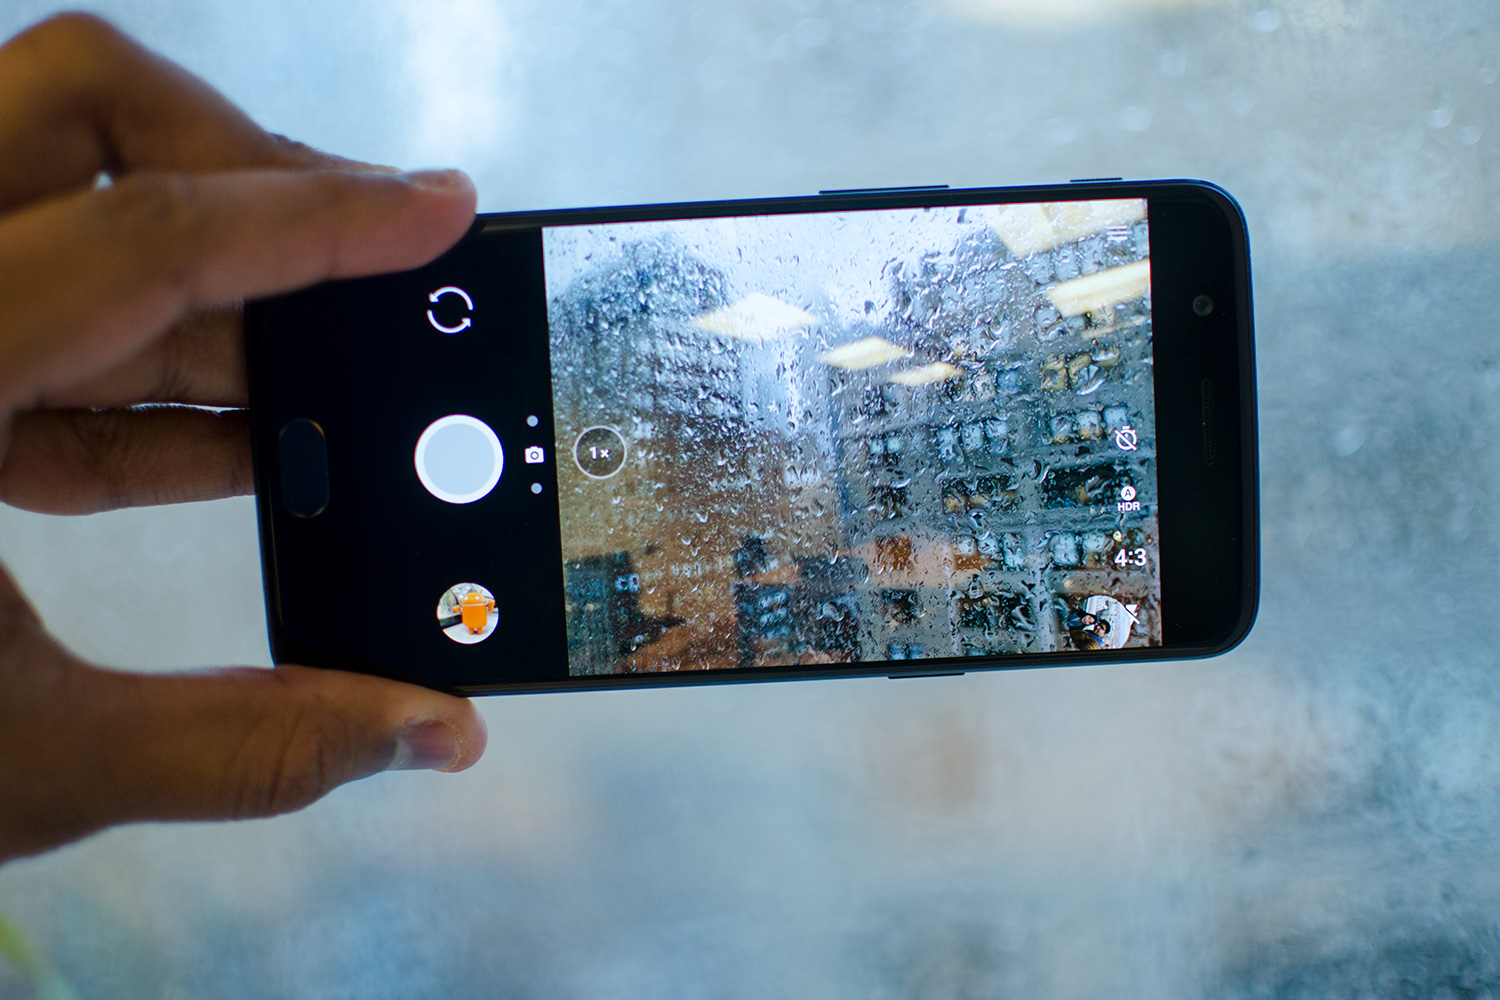 OnePlus 5 camera app